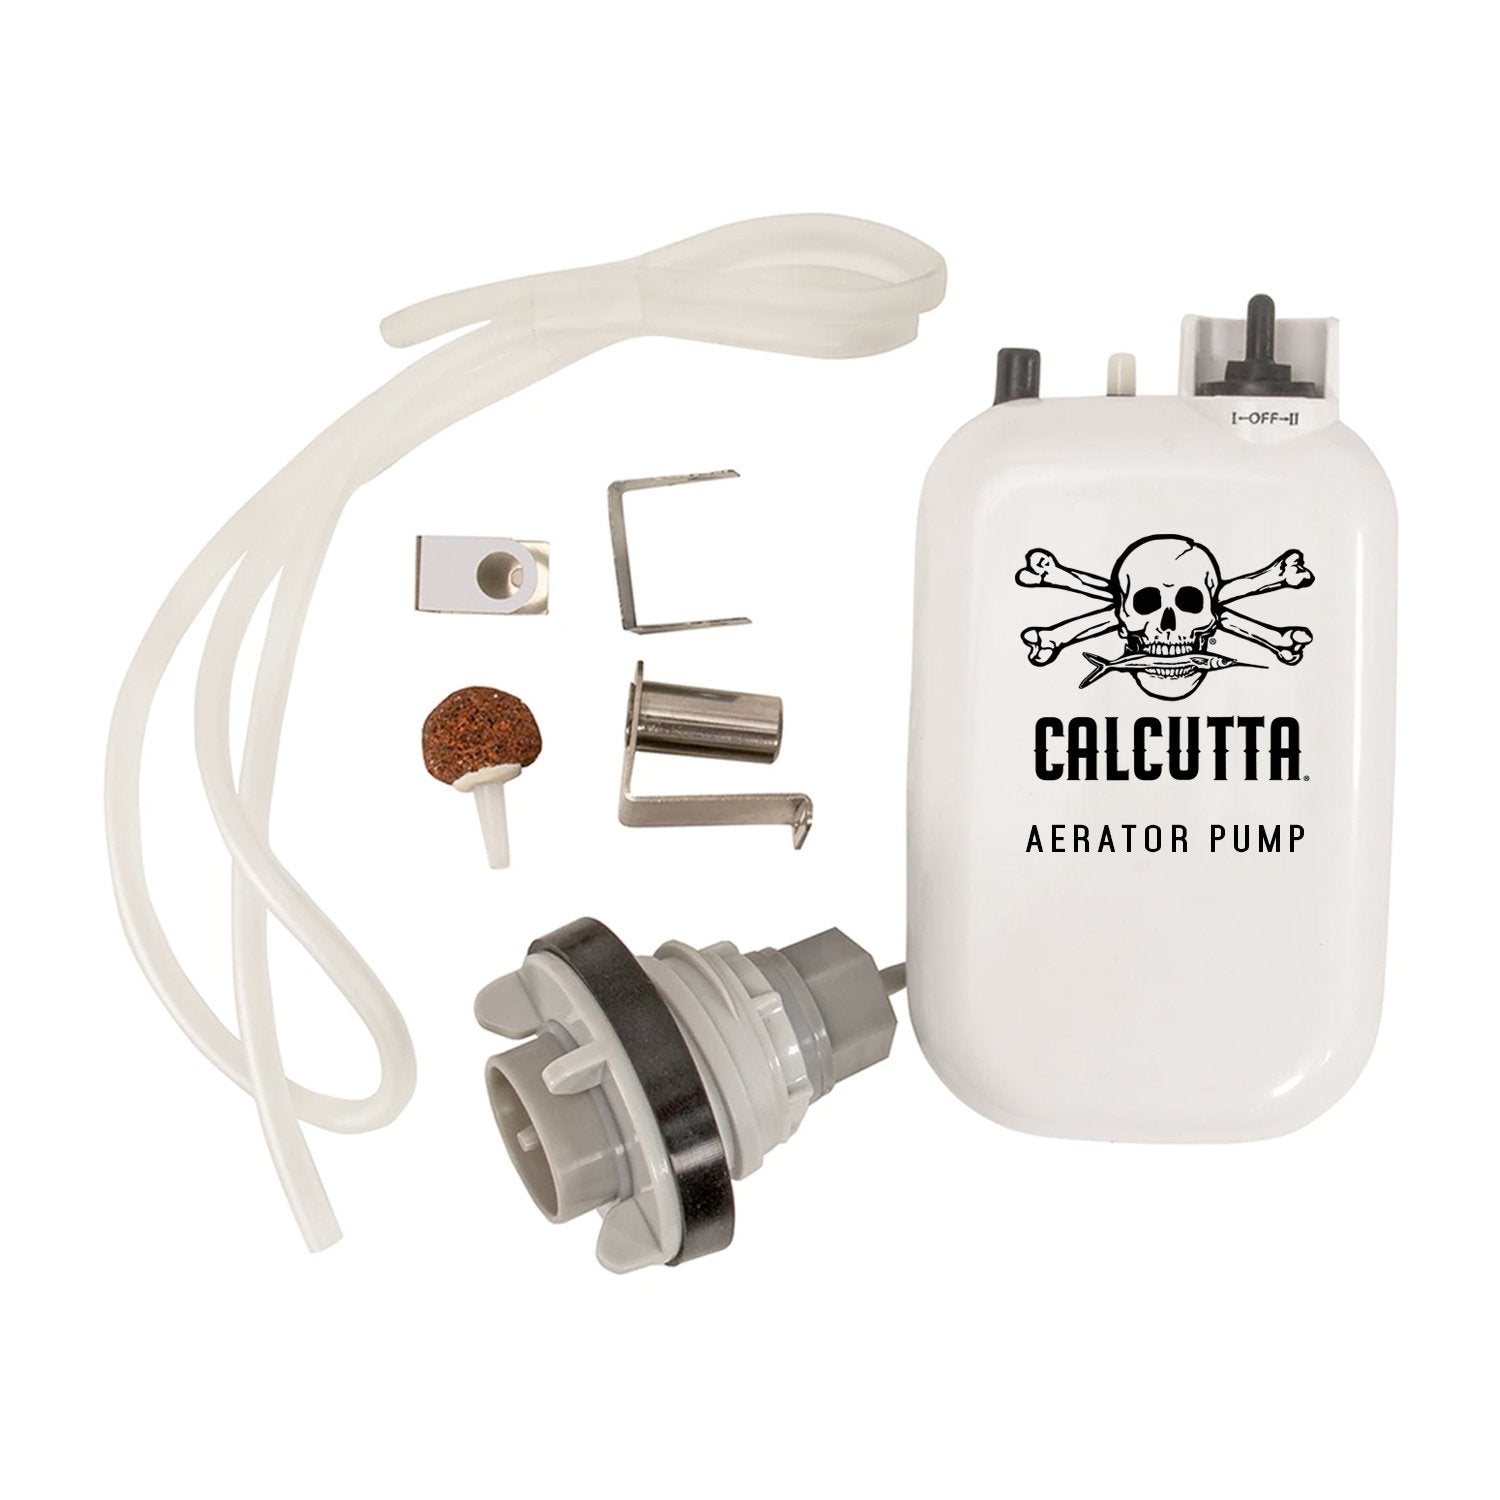 Calcutta aerator cooler pump kit